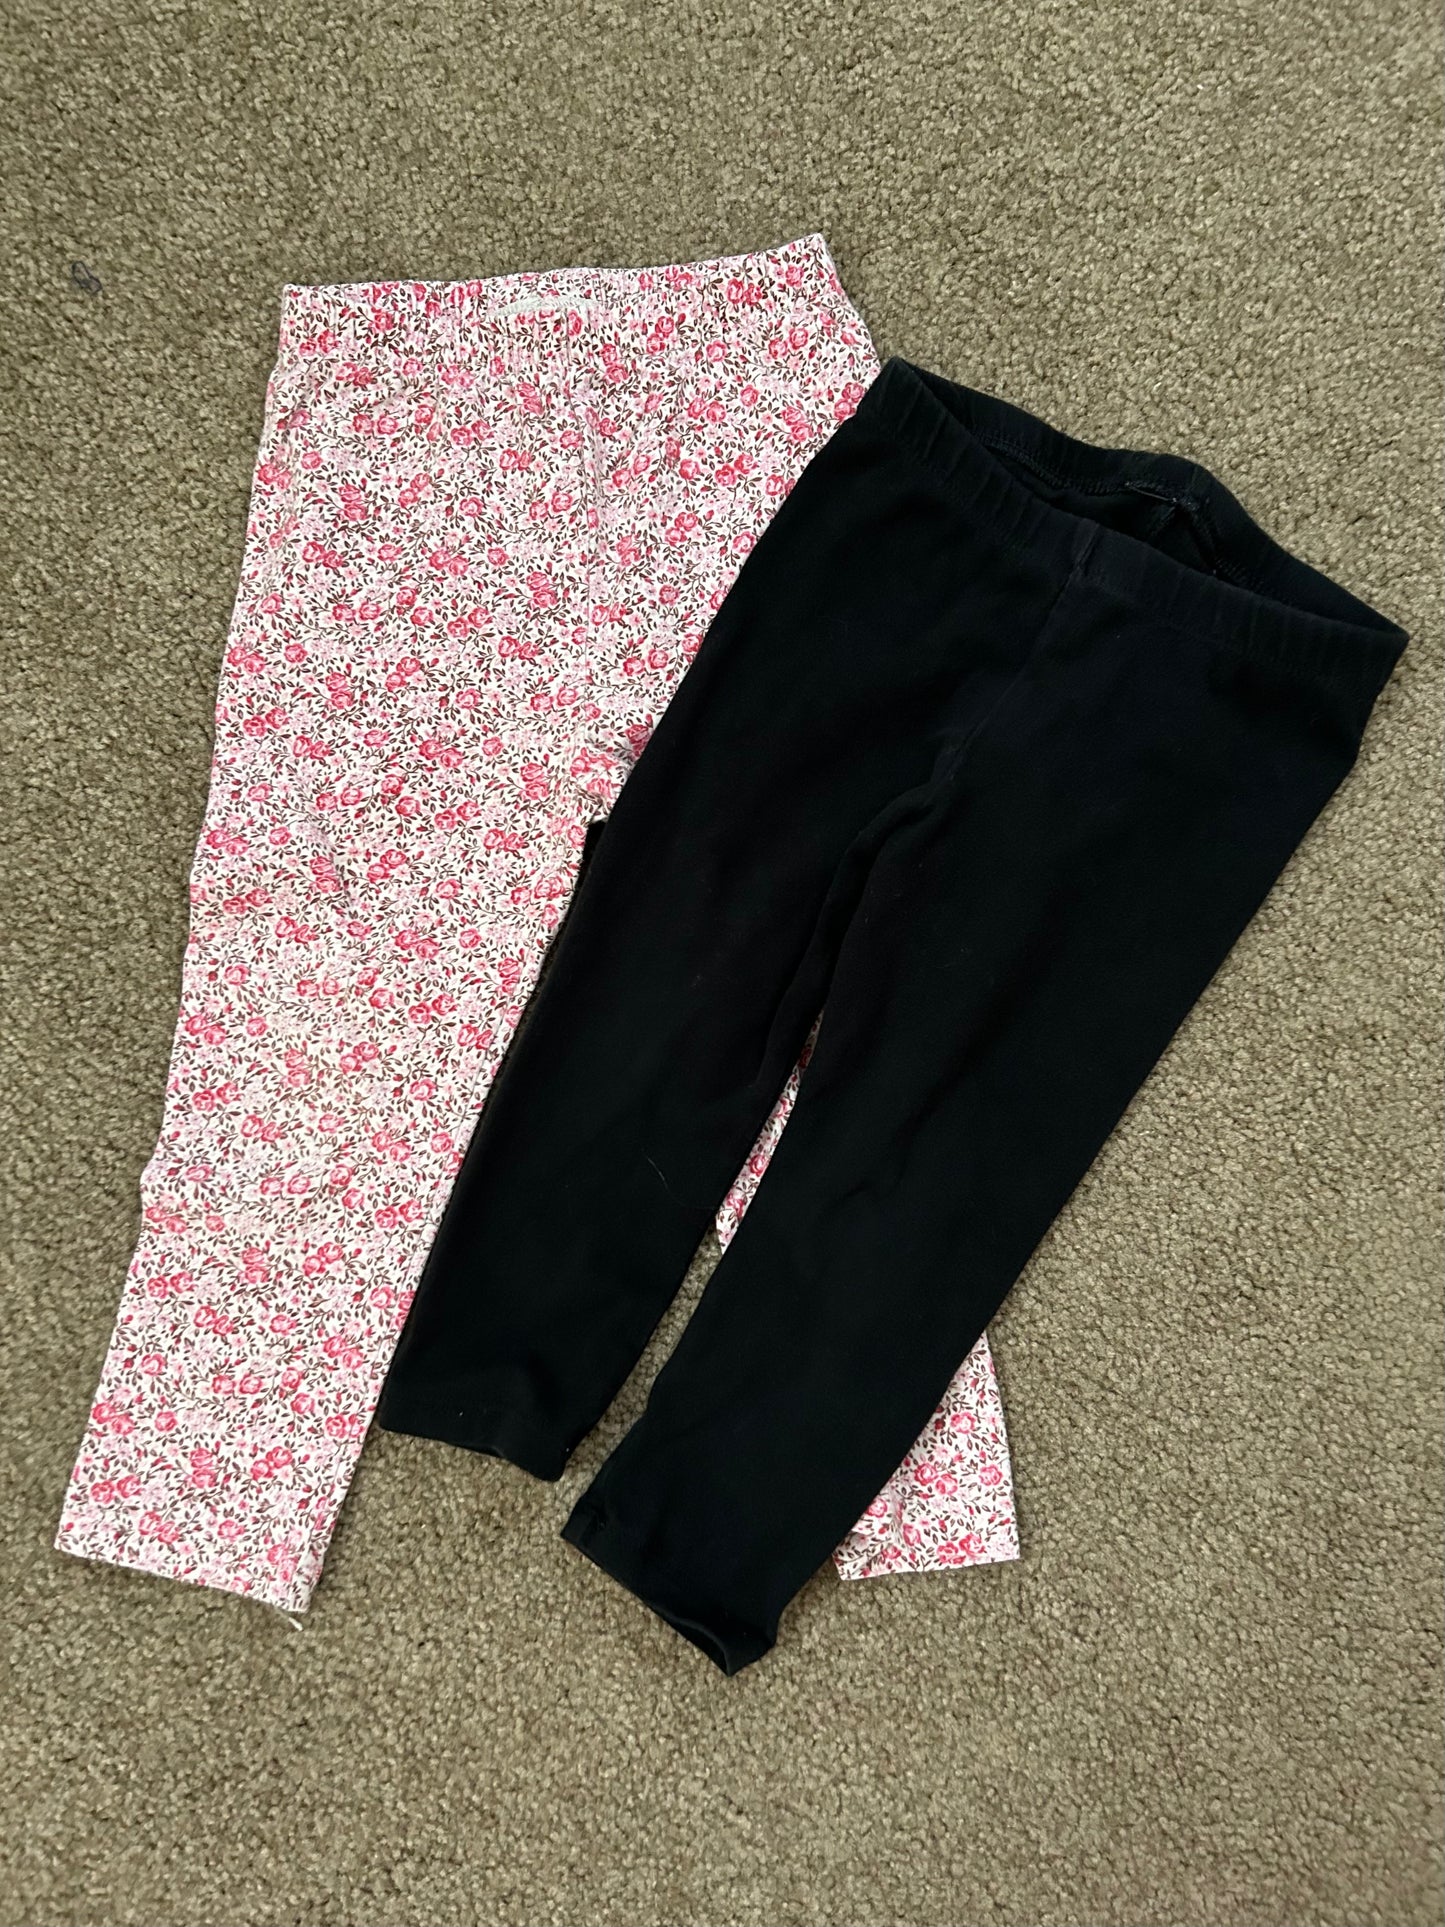 Girls 18-24 month leggings - 2 pair - Black/Flowered (Cat and Jack and Gap)